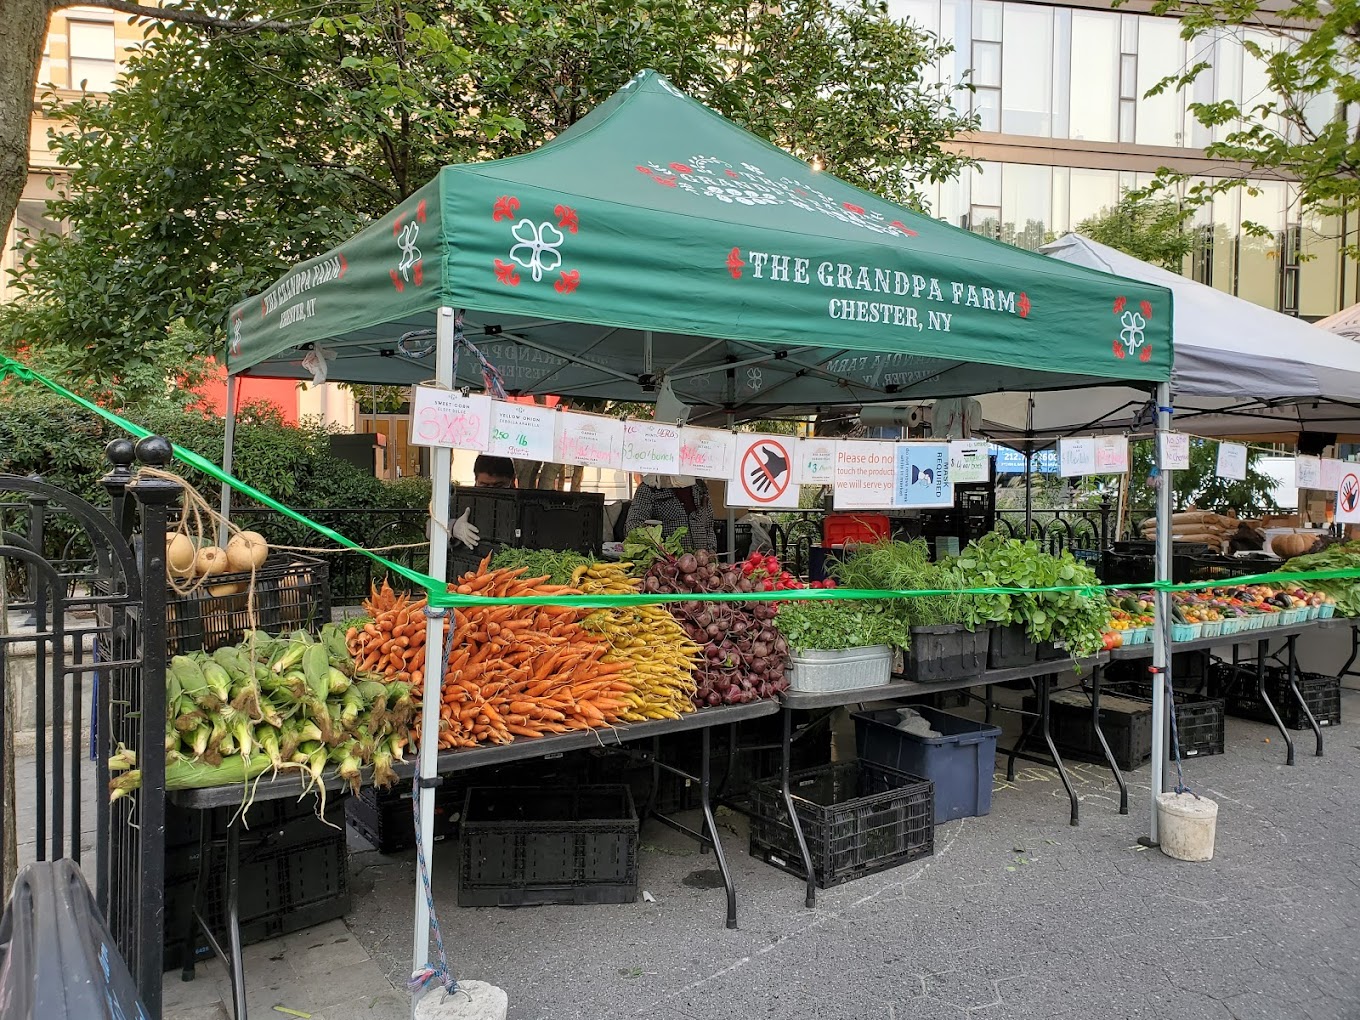 Union Square Greenmarket - NYC Food Marketplace